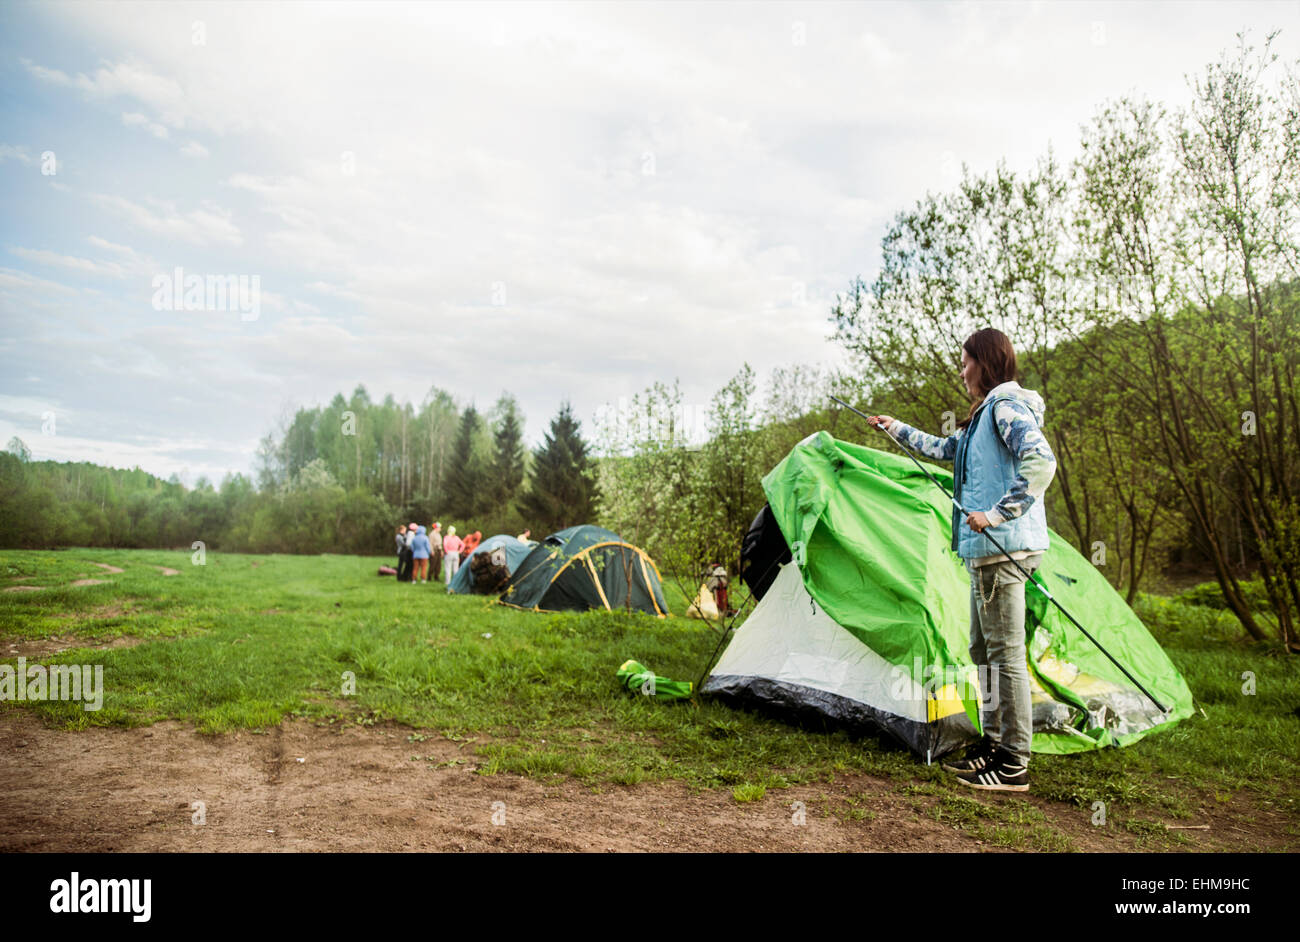 Caucasian camper assembling tent in remote field Stock Photo